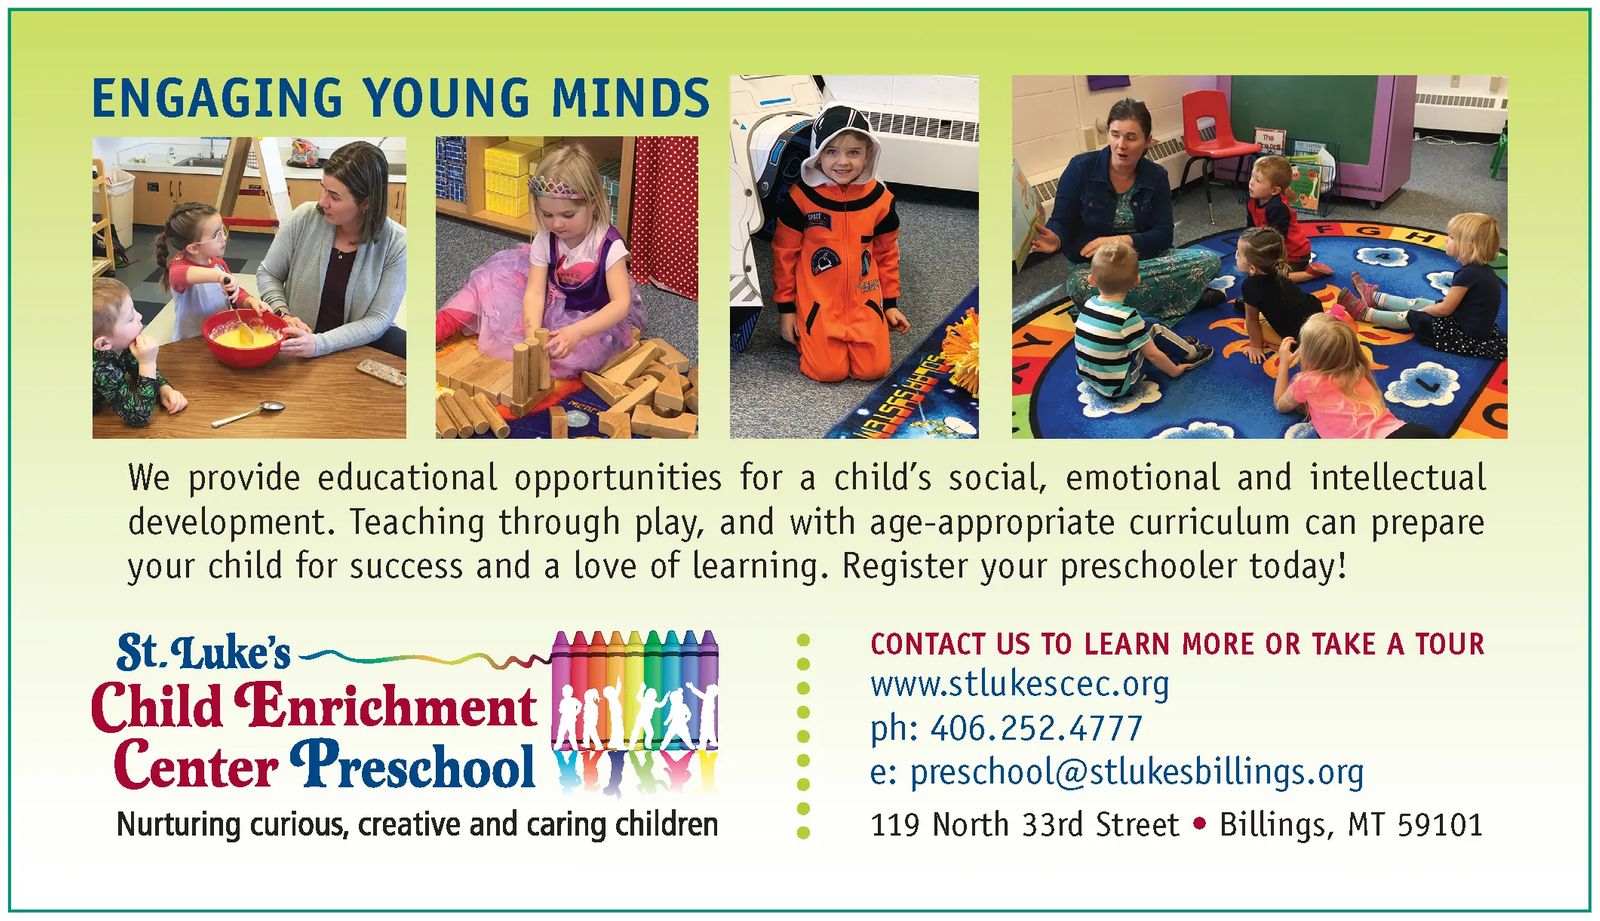 St. Luke's Child Enrichment Center Preschool